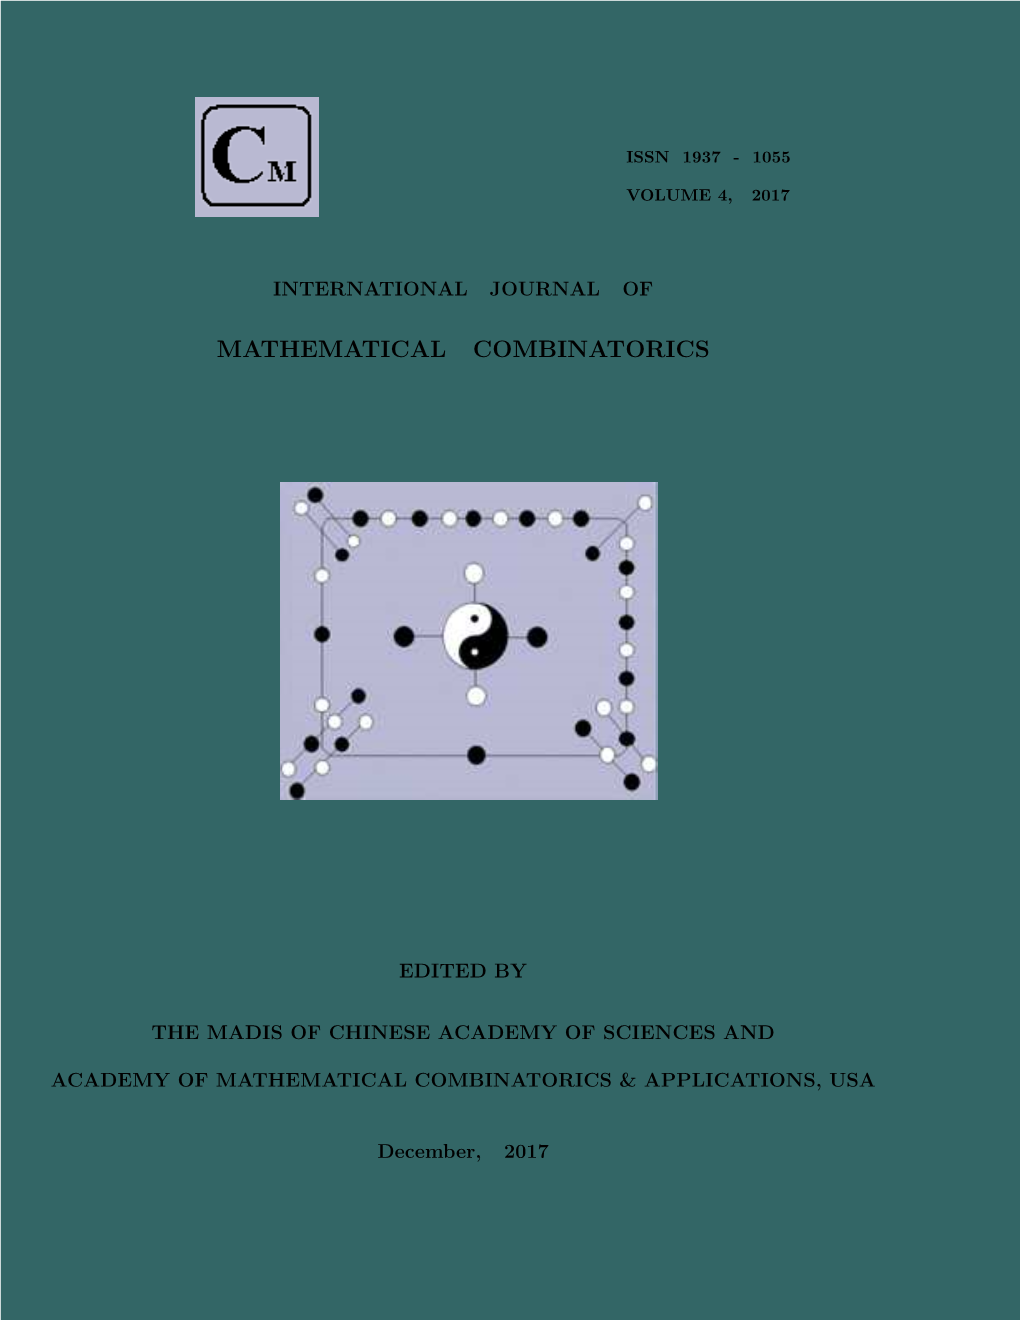 International Journal of Mathematical Combinatorics, Vol. 4, 2017